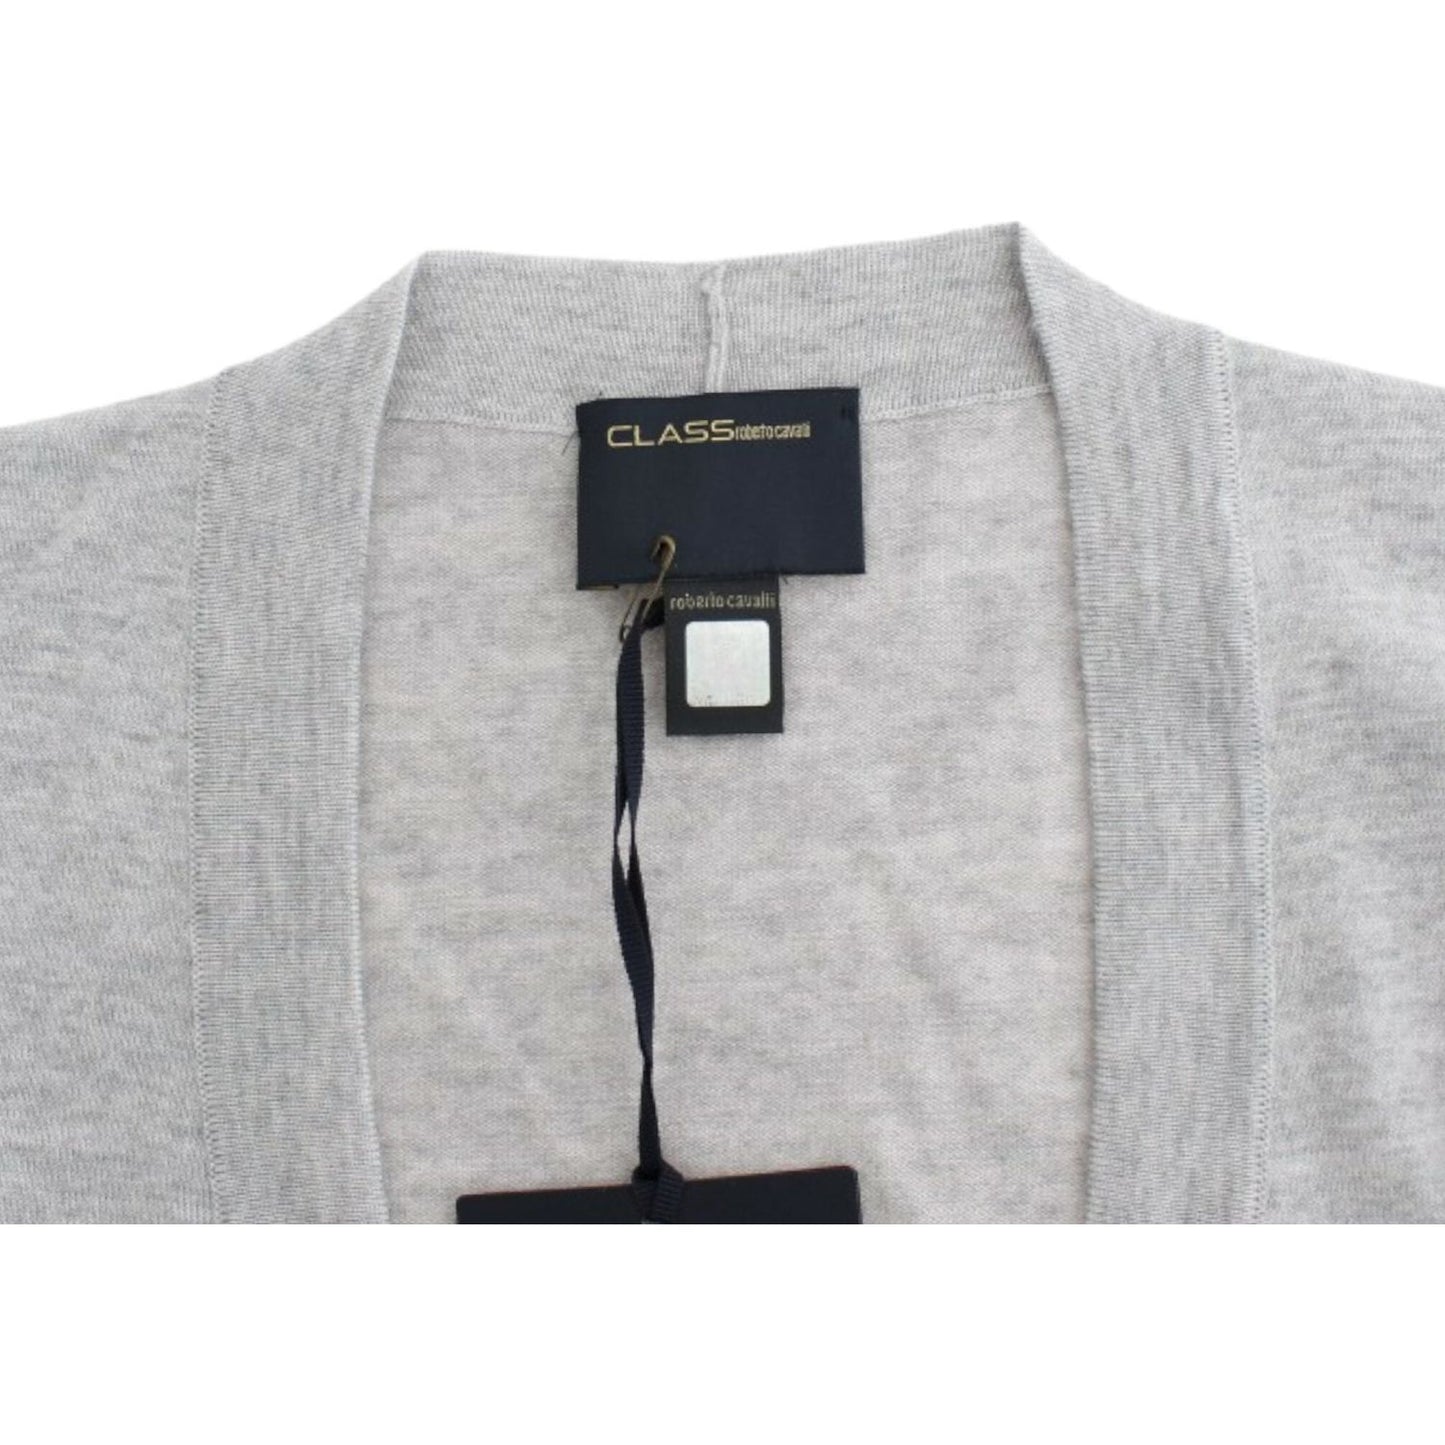 Cavalli Cropped Virgin Wool Cardigan in Chic Gray gray-cropped-wool-cardigan 8955-gray-cropped-wool-cardigan-6-1-scaled-e1b430cd-d0f.jpg